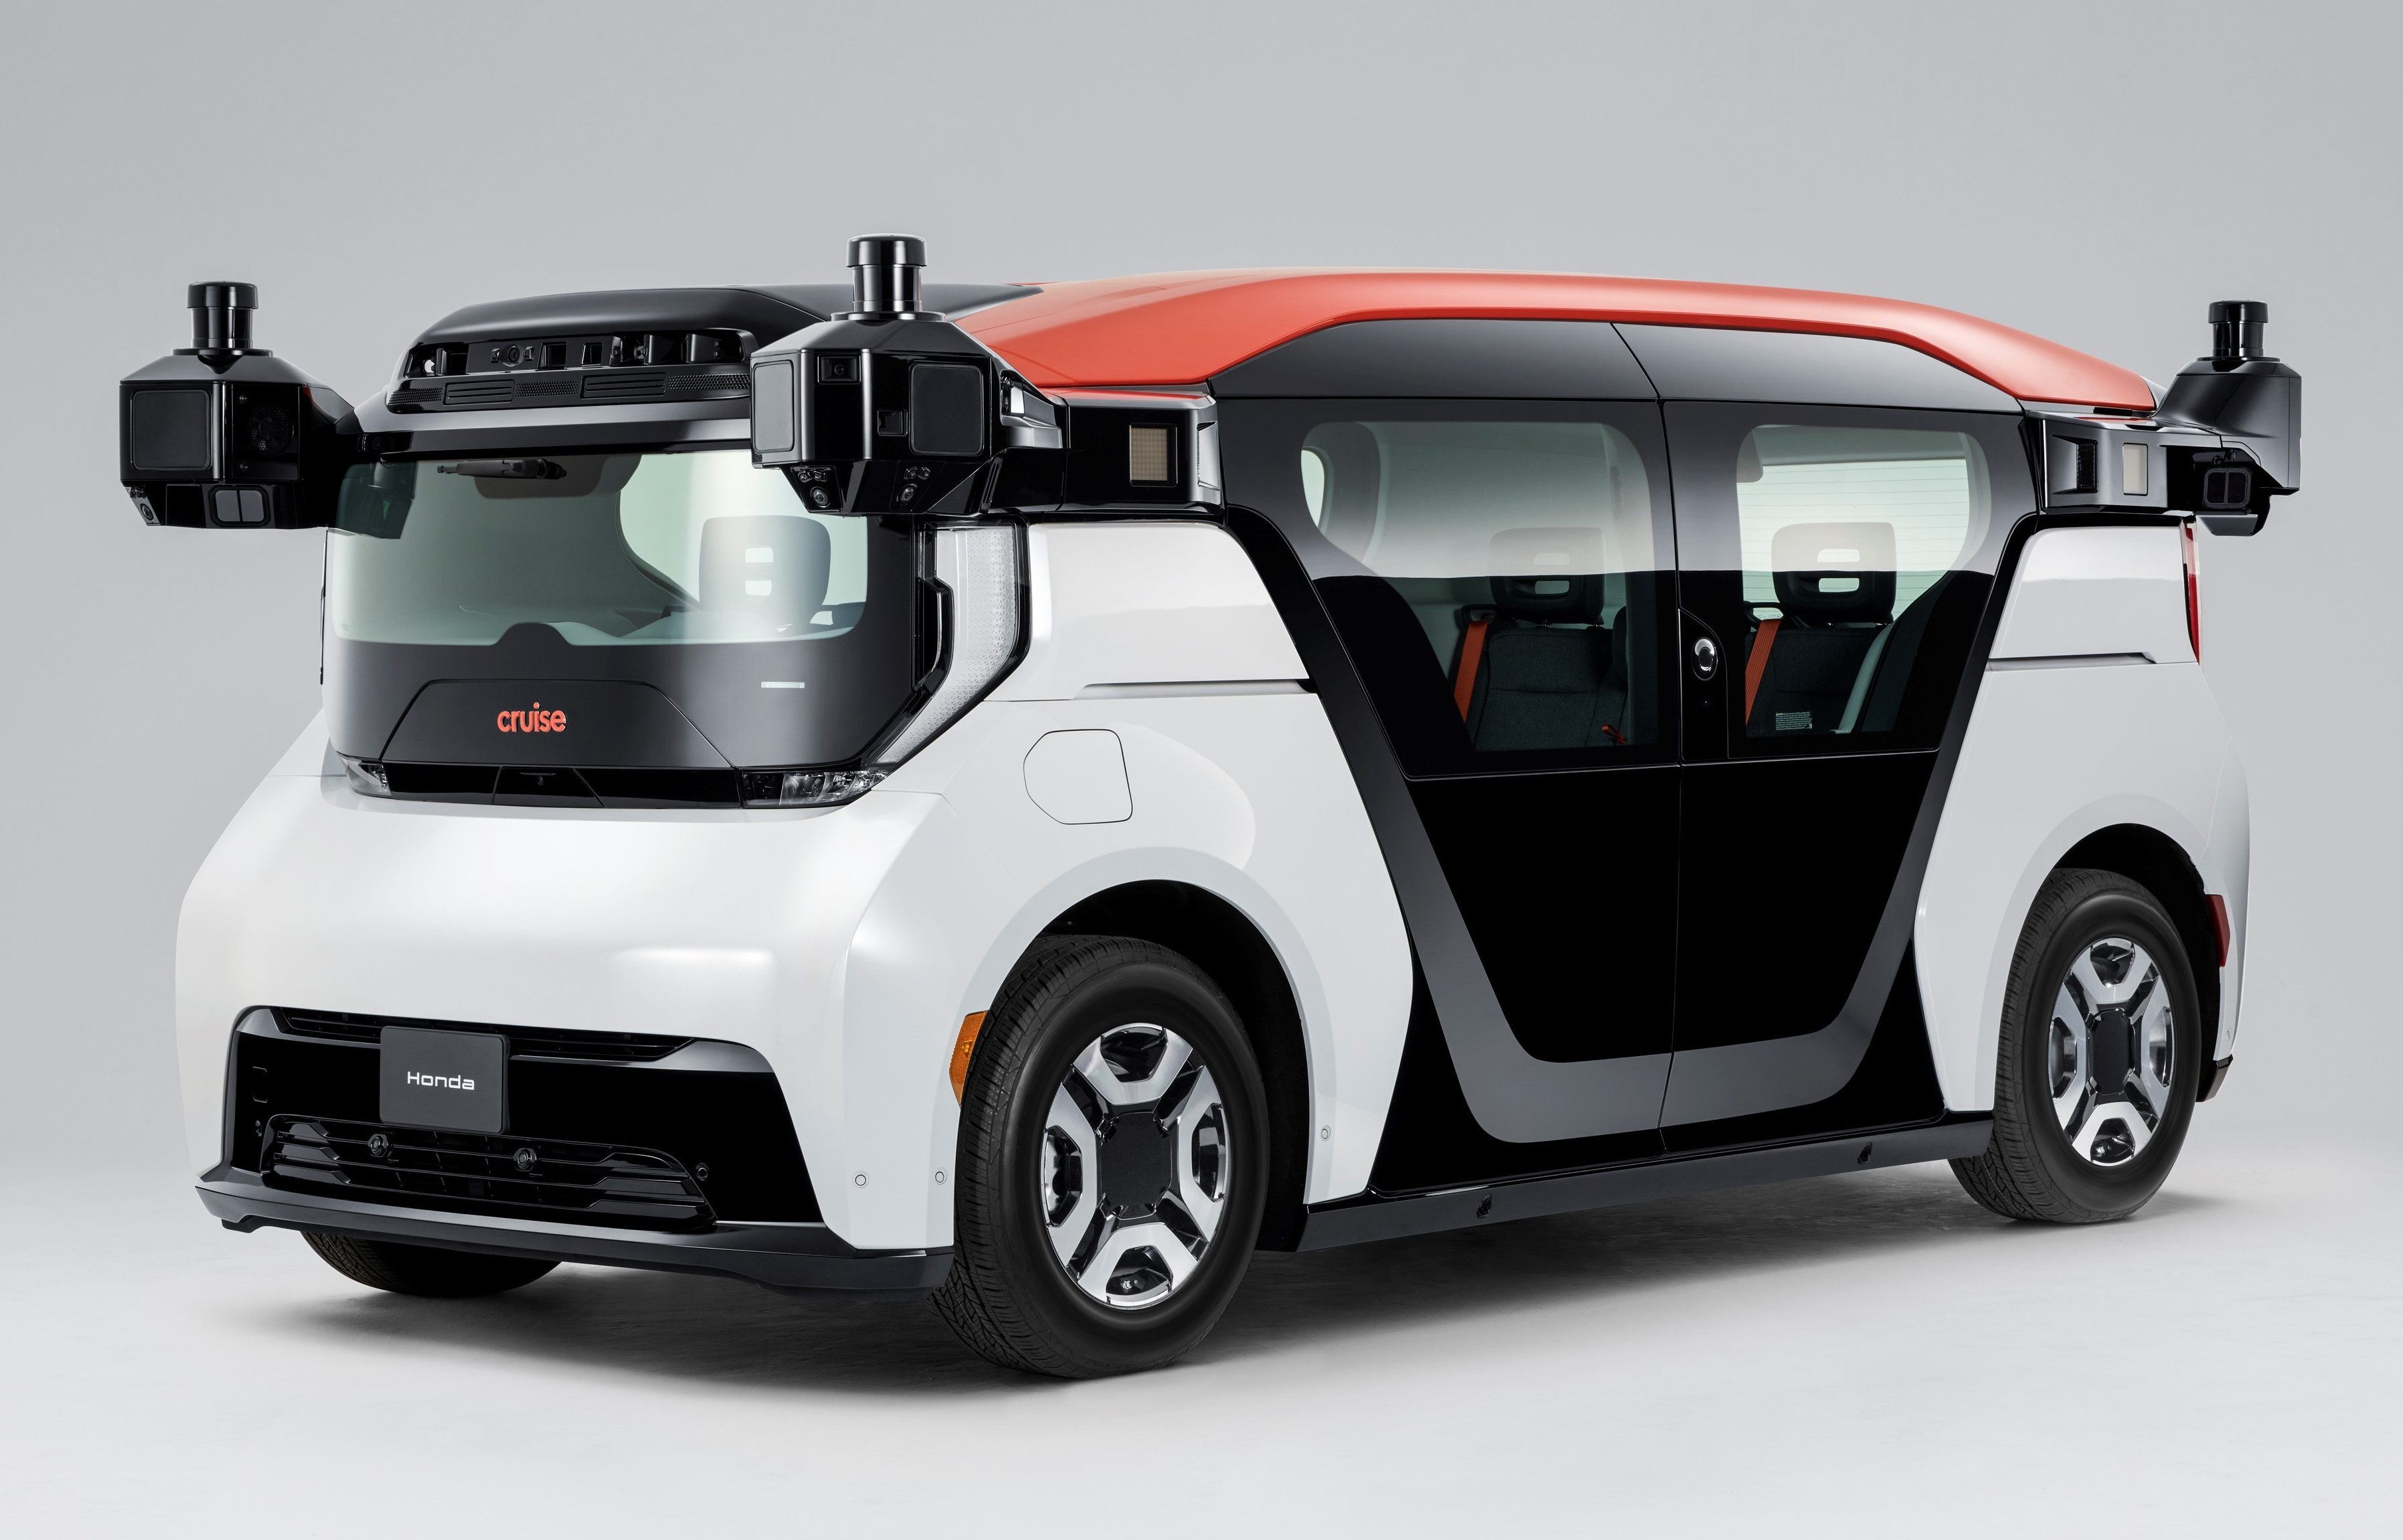 Honda Cruise Origin autonomous vehicle